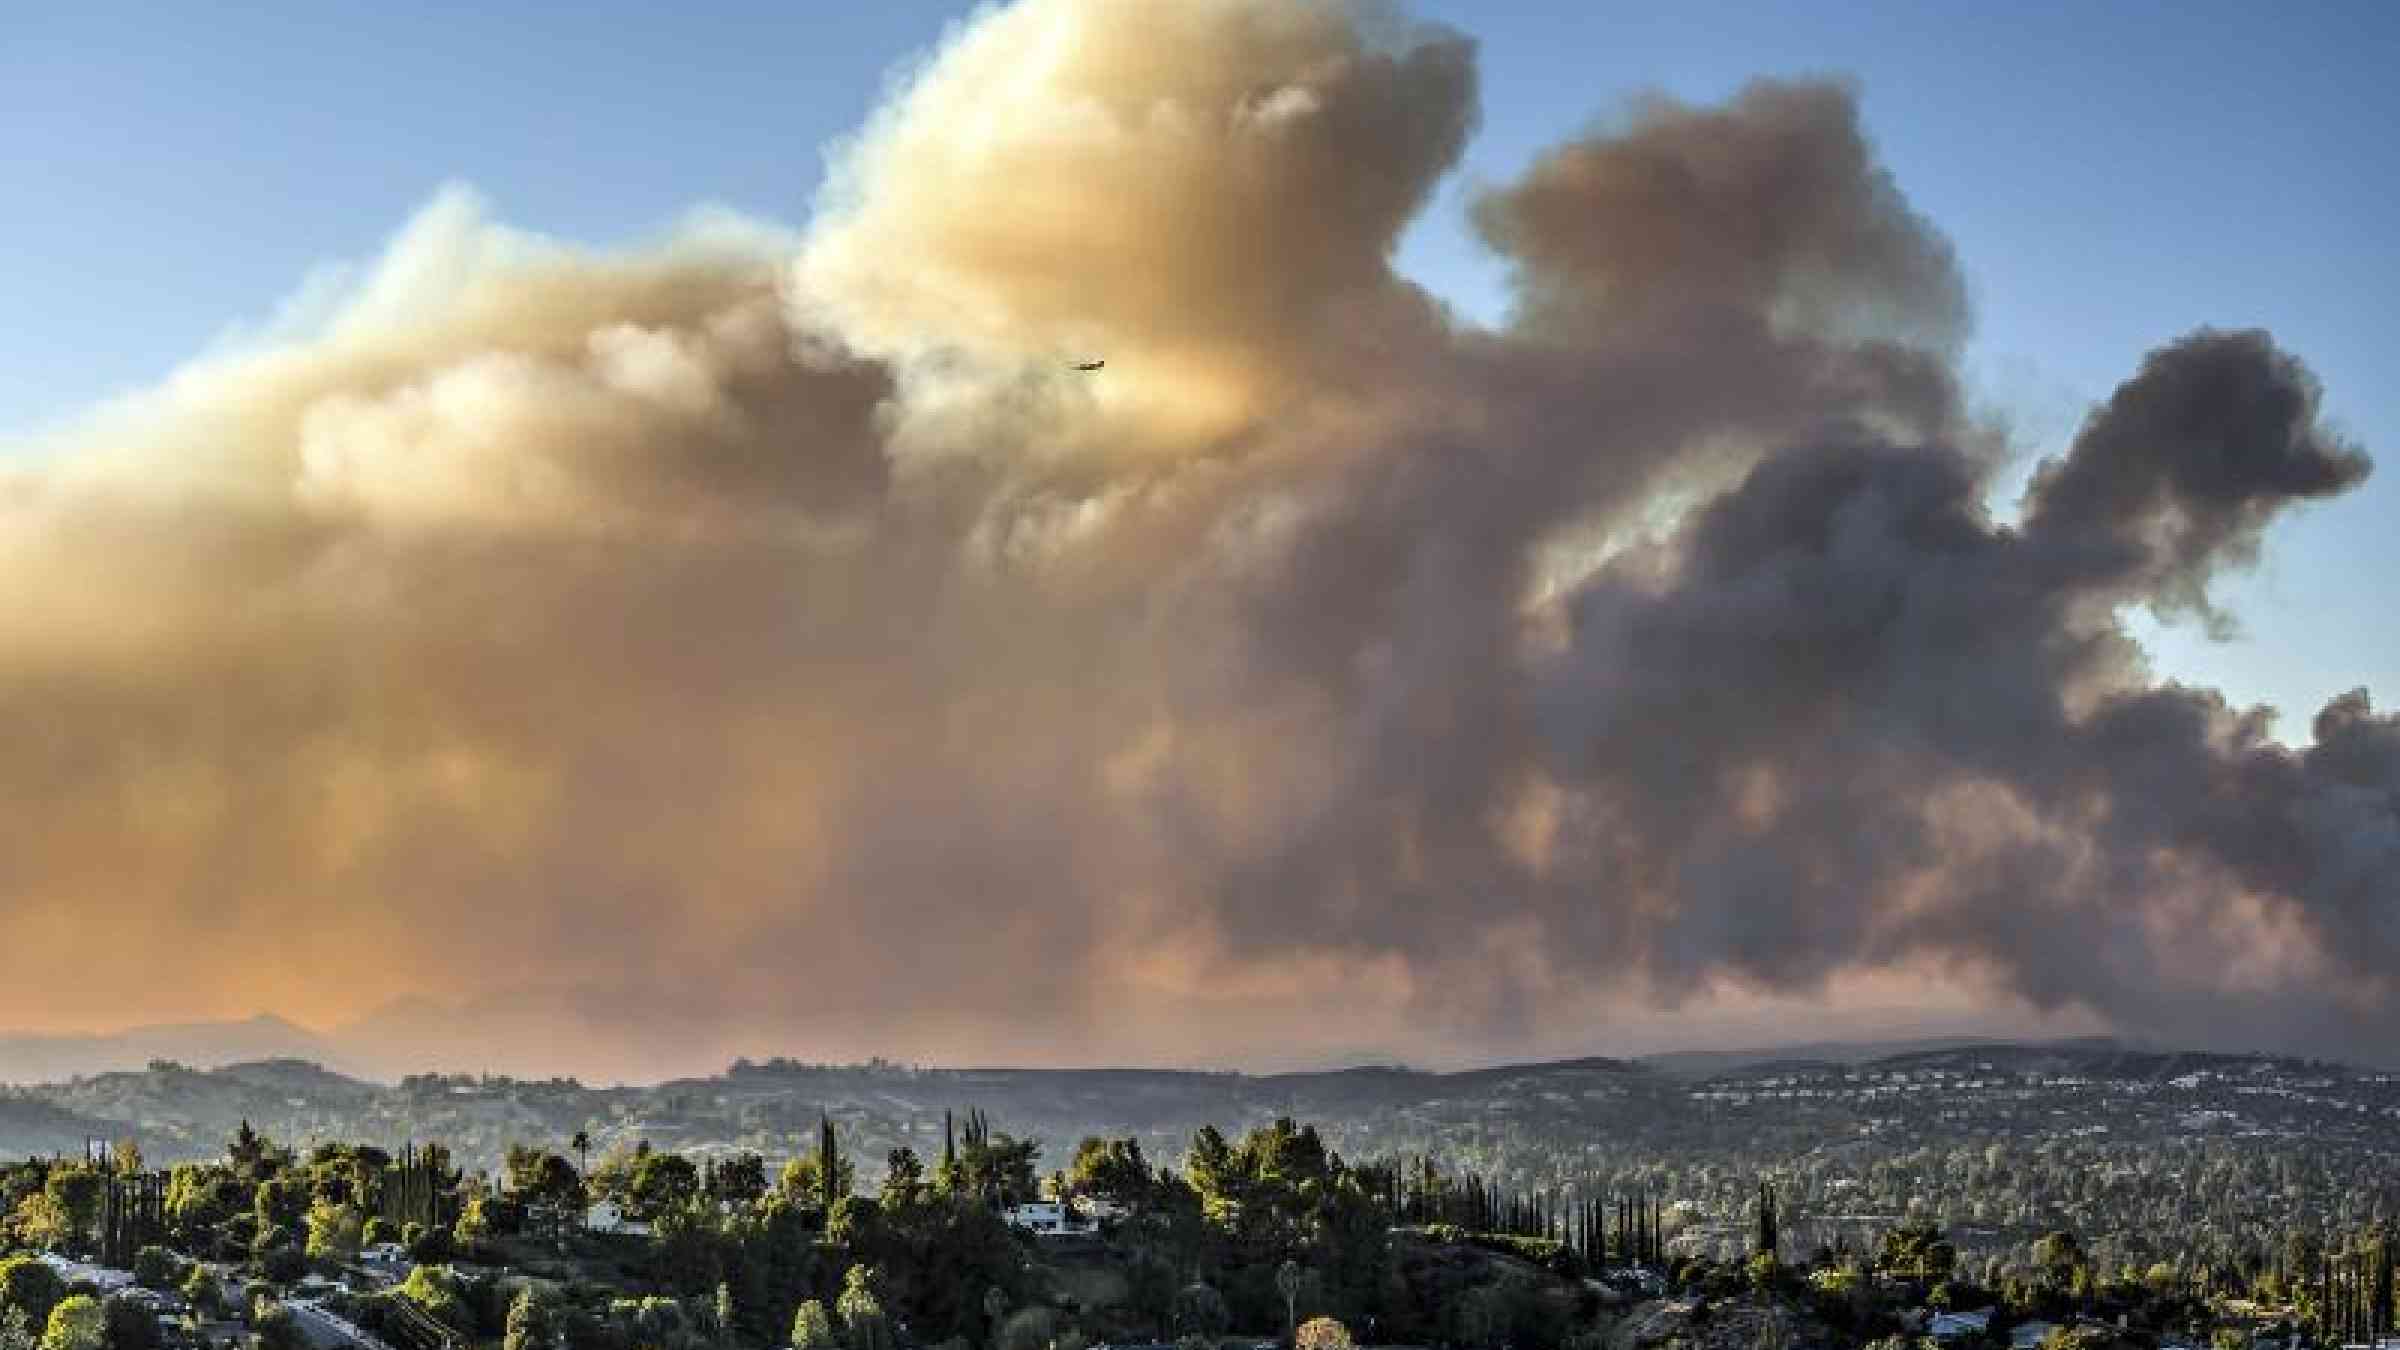 The November 2018 Woolsey fire seen from Topanga, California. (Image credit: Peter Buschmann / U.S. Forest Service)